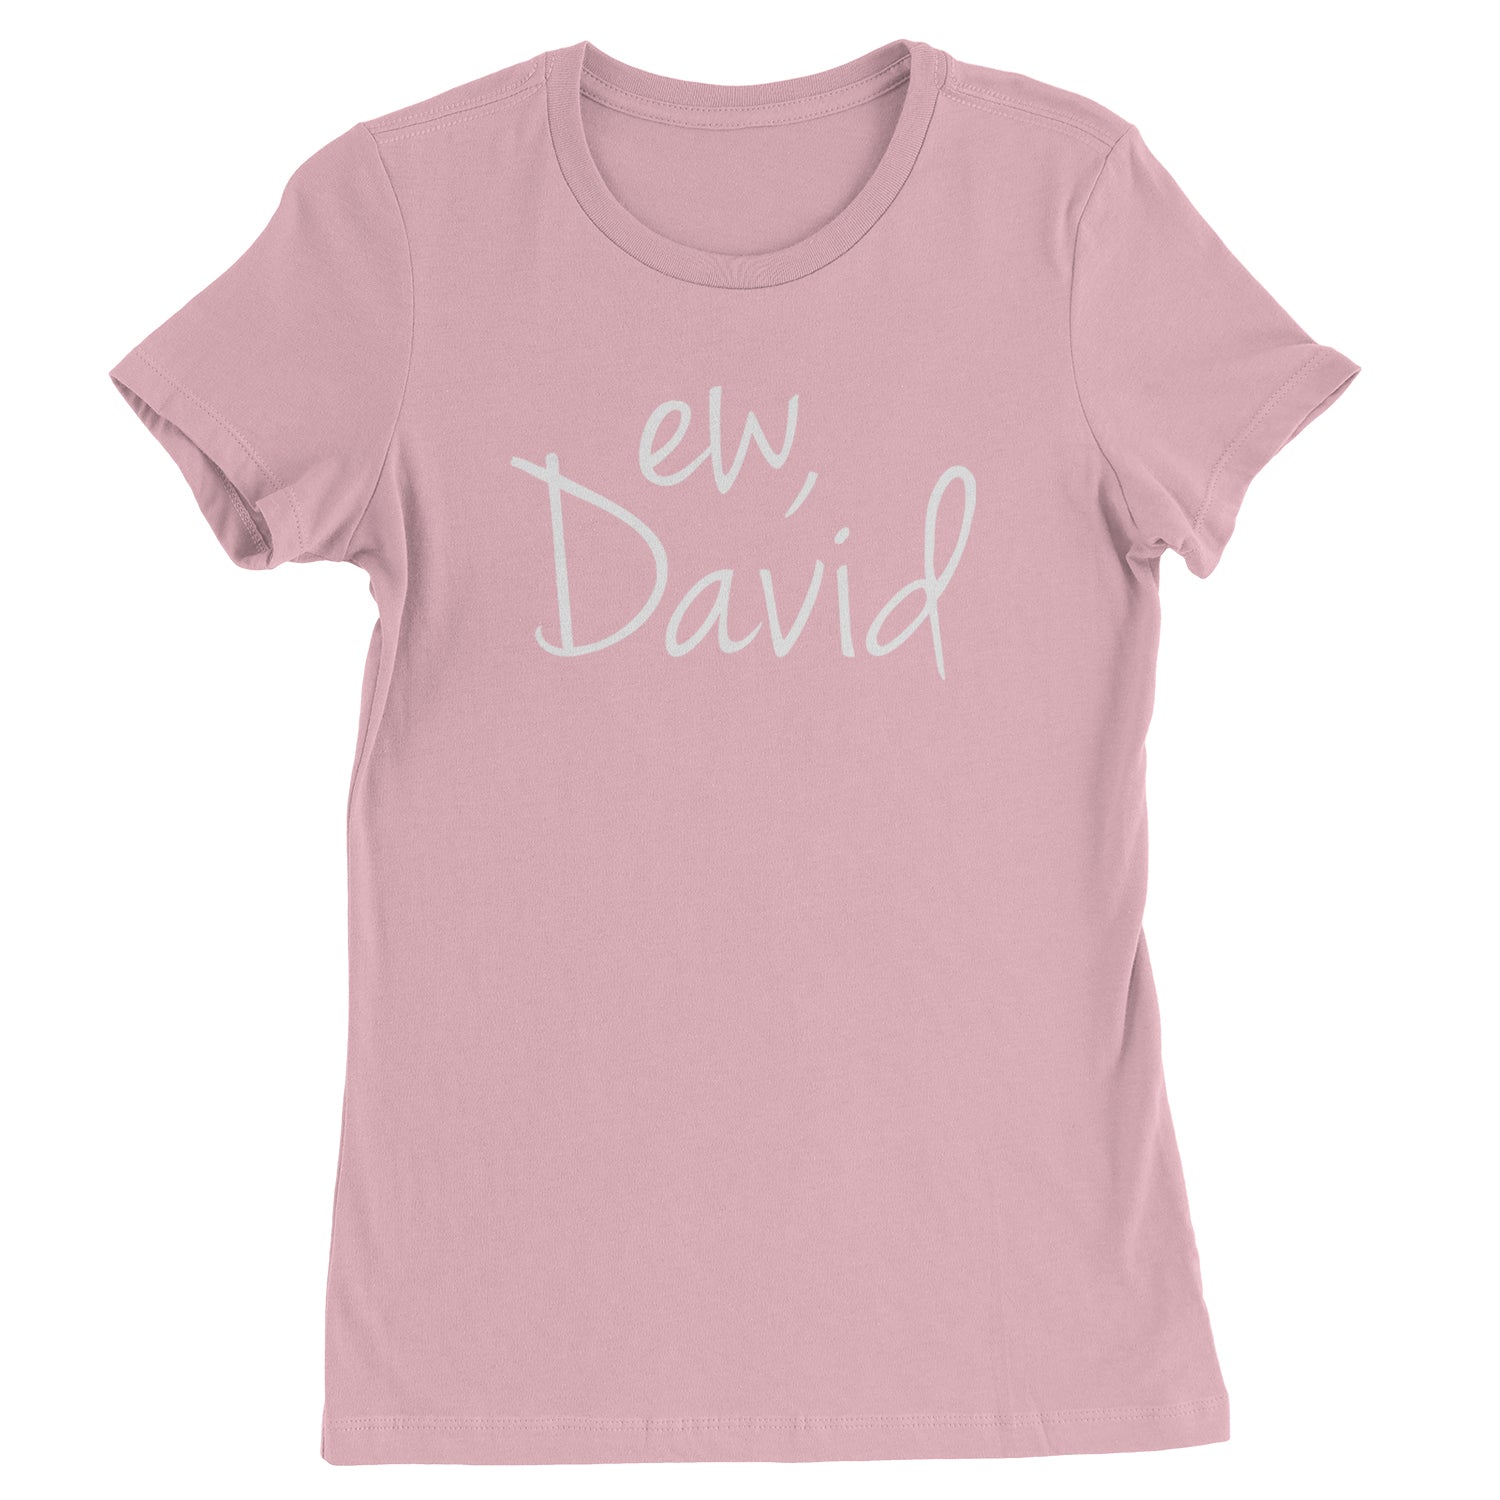 Ew, David Funny Creek TV Show Womens T-shirt alexis, bit, david, eugene, levy, little, nonchalance, schitt by Expression Tees